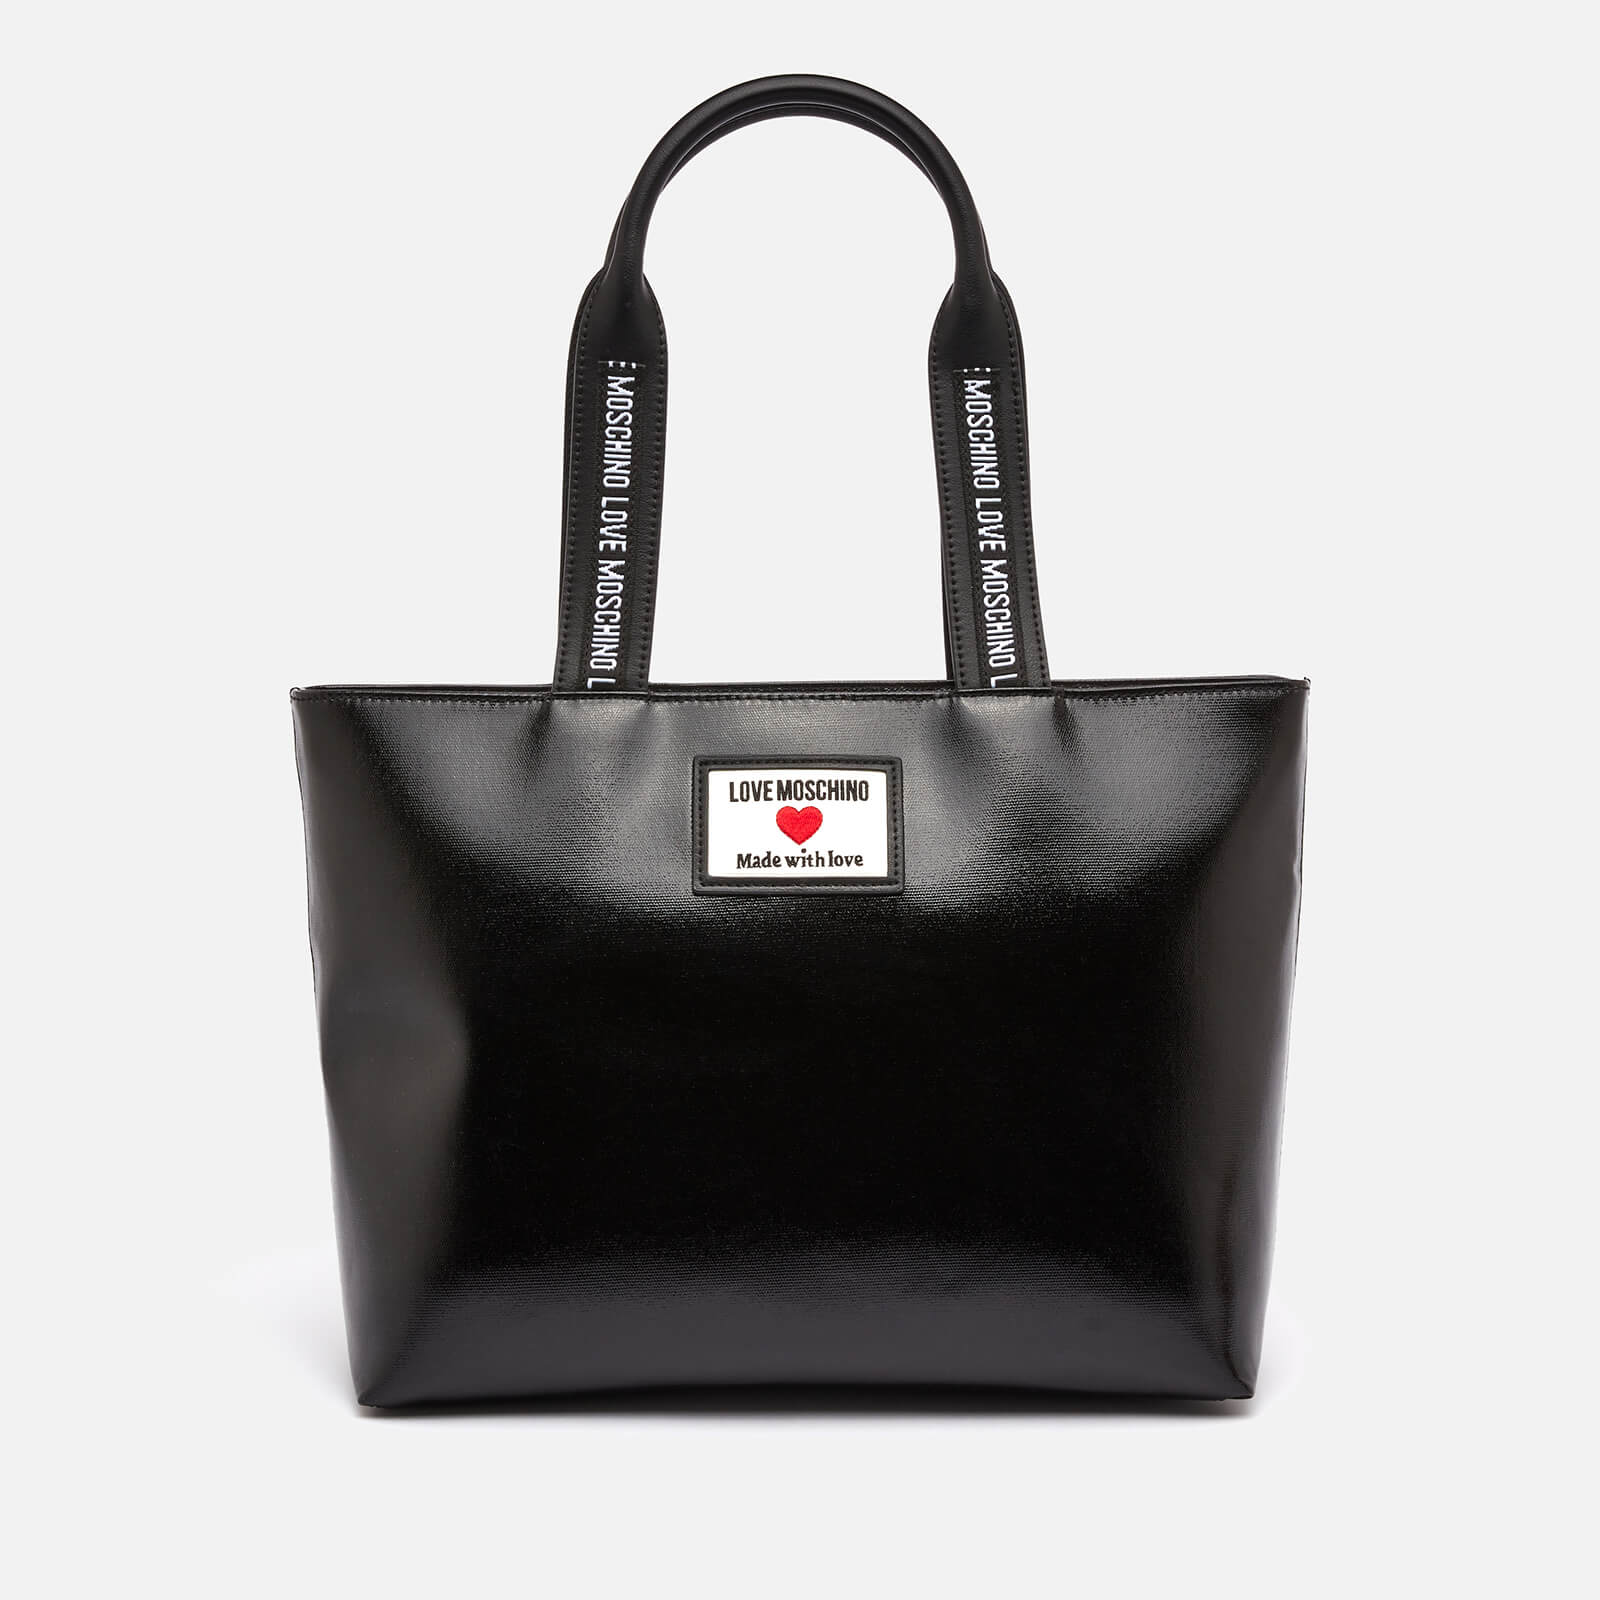 Love Moschino Women's Heart Logo Tote Bag - Black